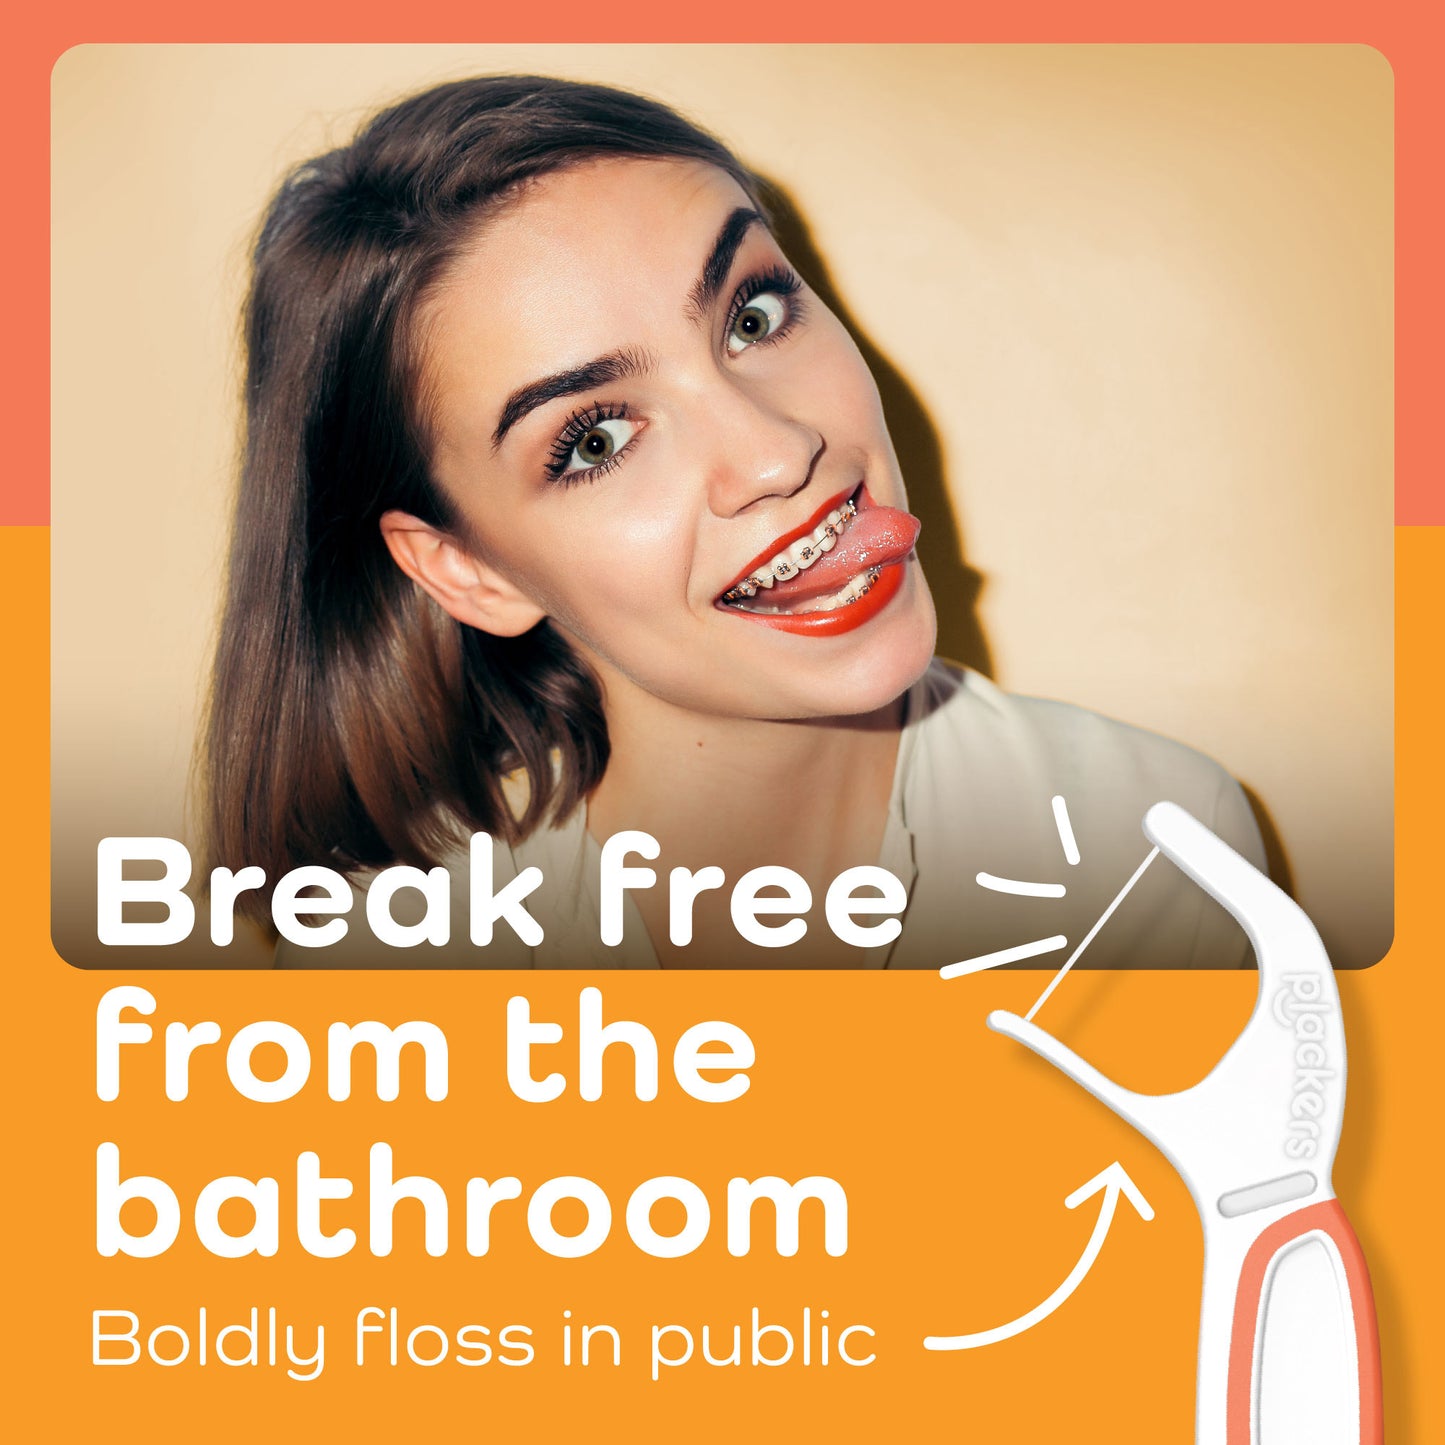 Break free from the bathroom. Boldly floss in public